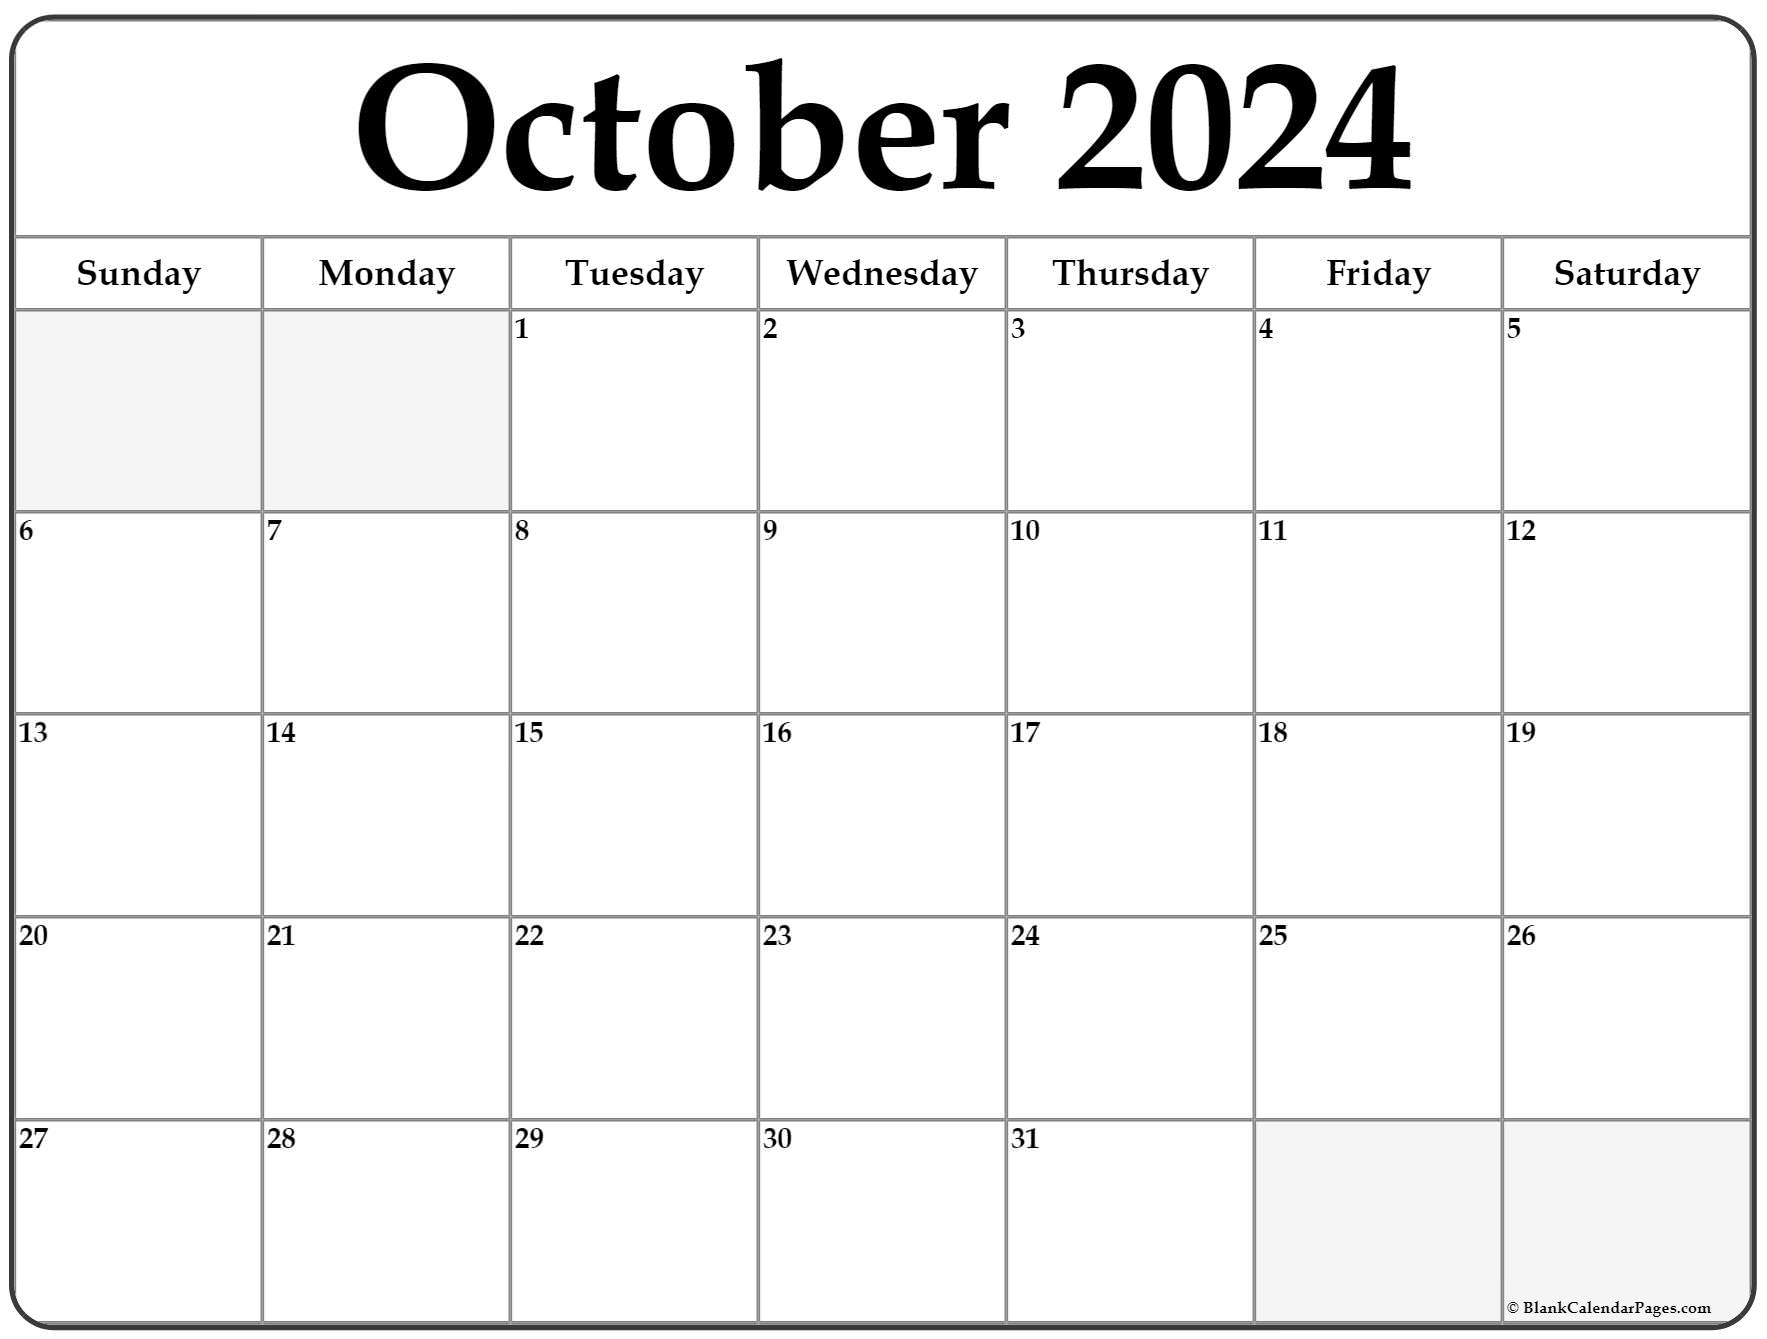 Free Printable Calendar 2022 October October 2022 Calendar | Free Printable Calendar Templates